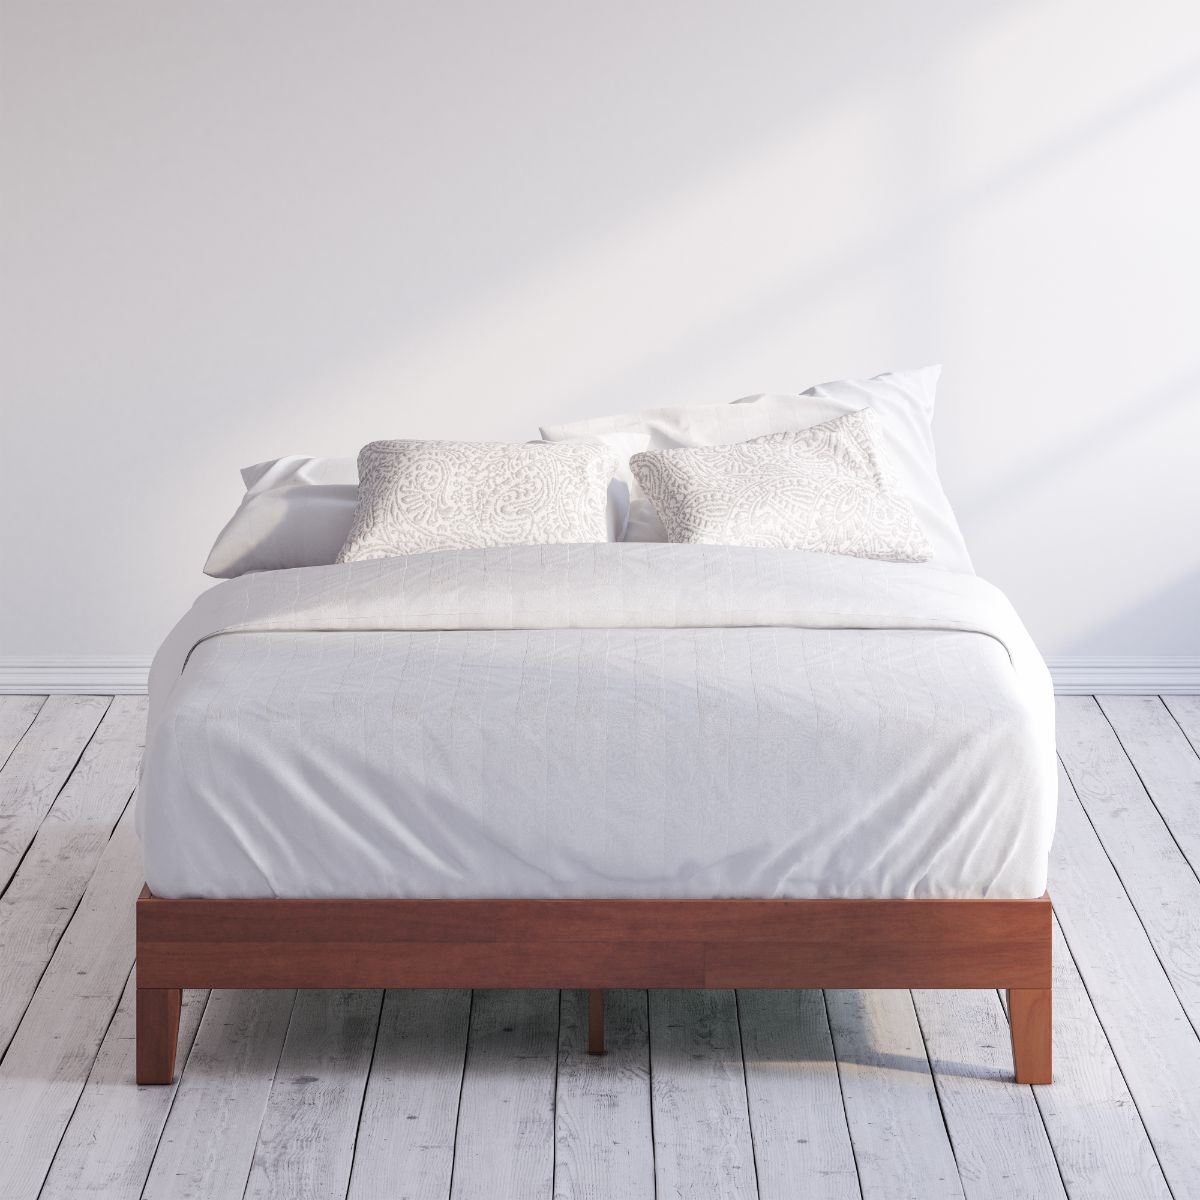 Wen Deluxe Wood Platform Bed Frame Zinus, Zinus Wood Bed Frame